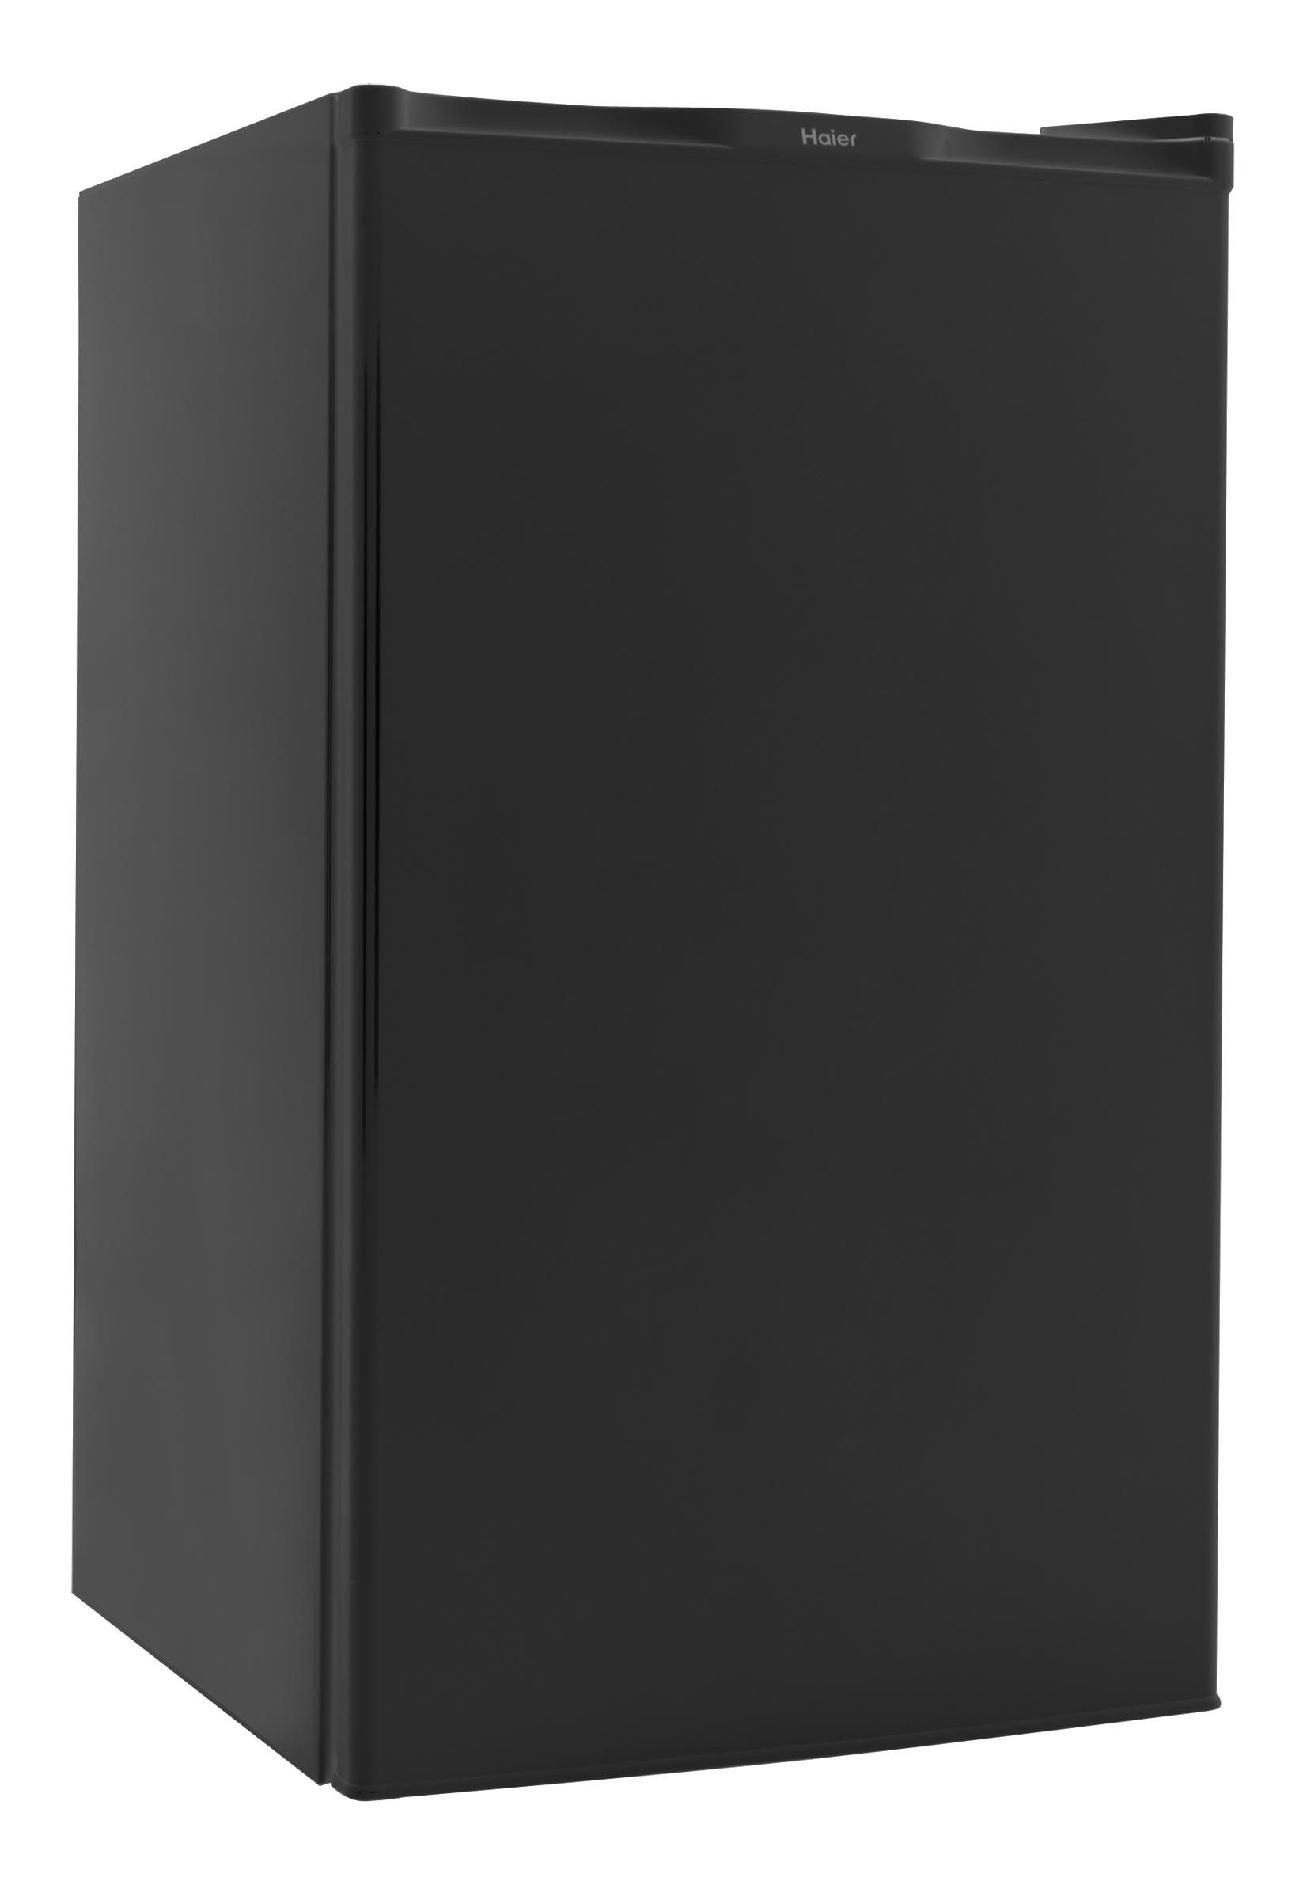 2.50 Cubic Foot Refrigerator/Freezer - Black